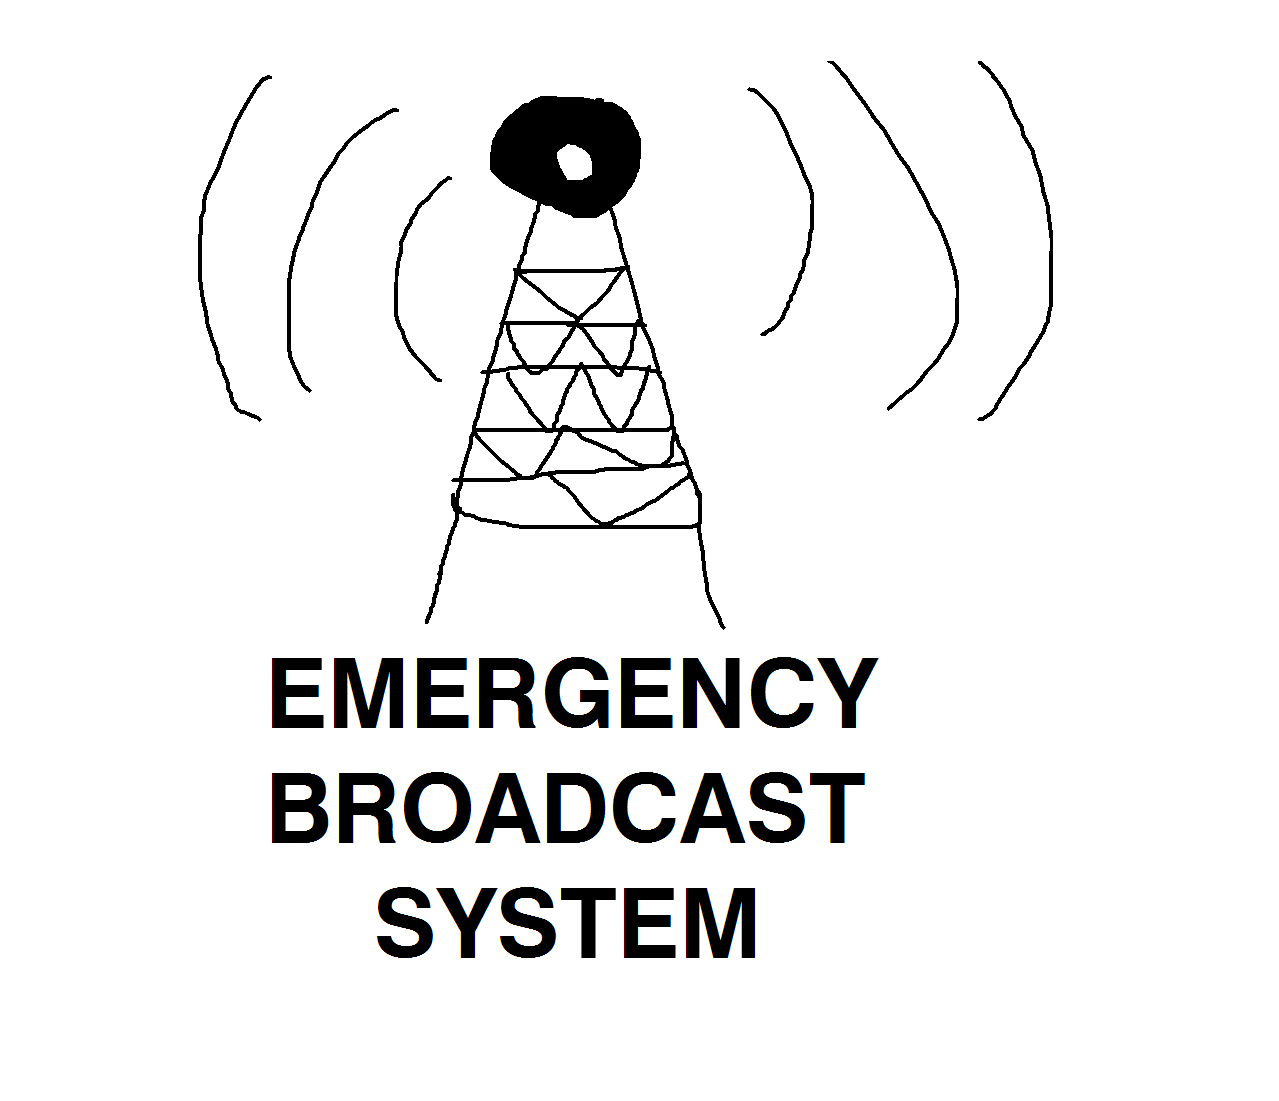 The Emergency Broadcast System by MikeJEddyNSGamer89 on DeviantArt